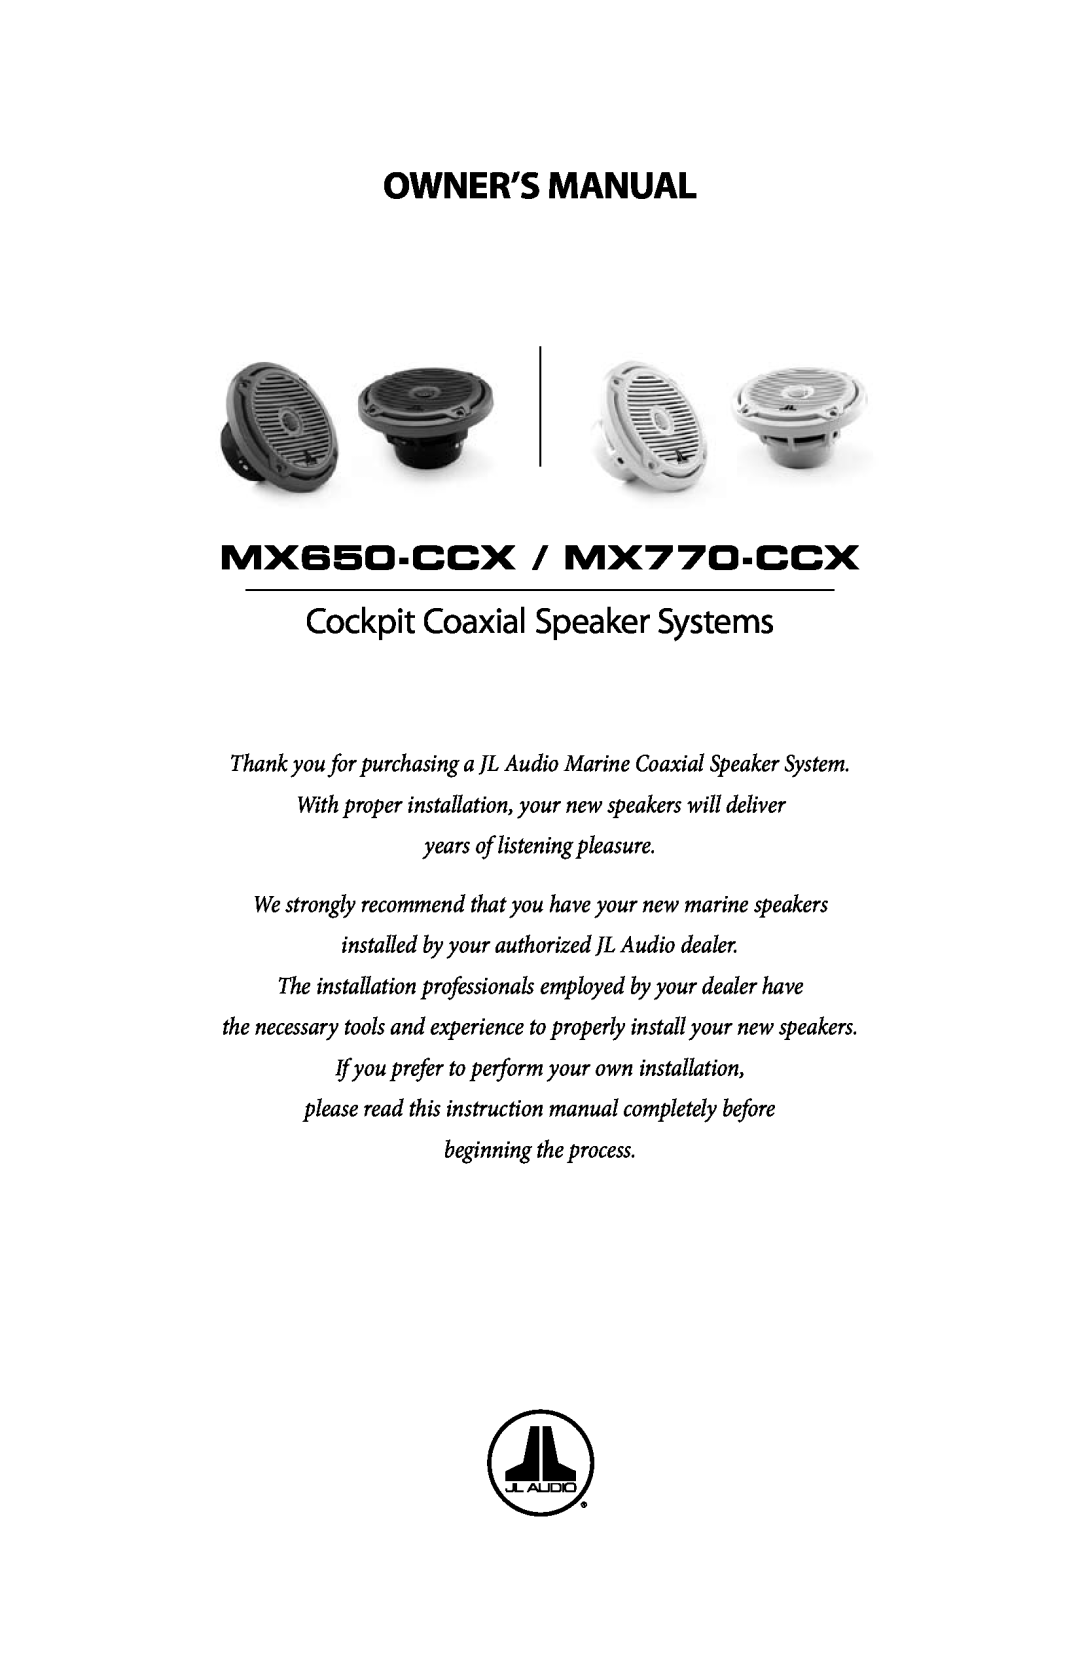 JL Audio owner manual Cockpit Coaxial Speaker Systems, MX650-CCX / MX770-CCX 